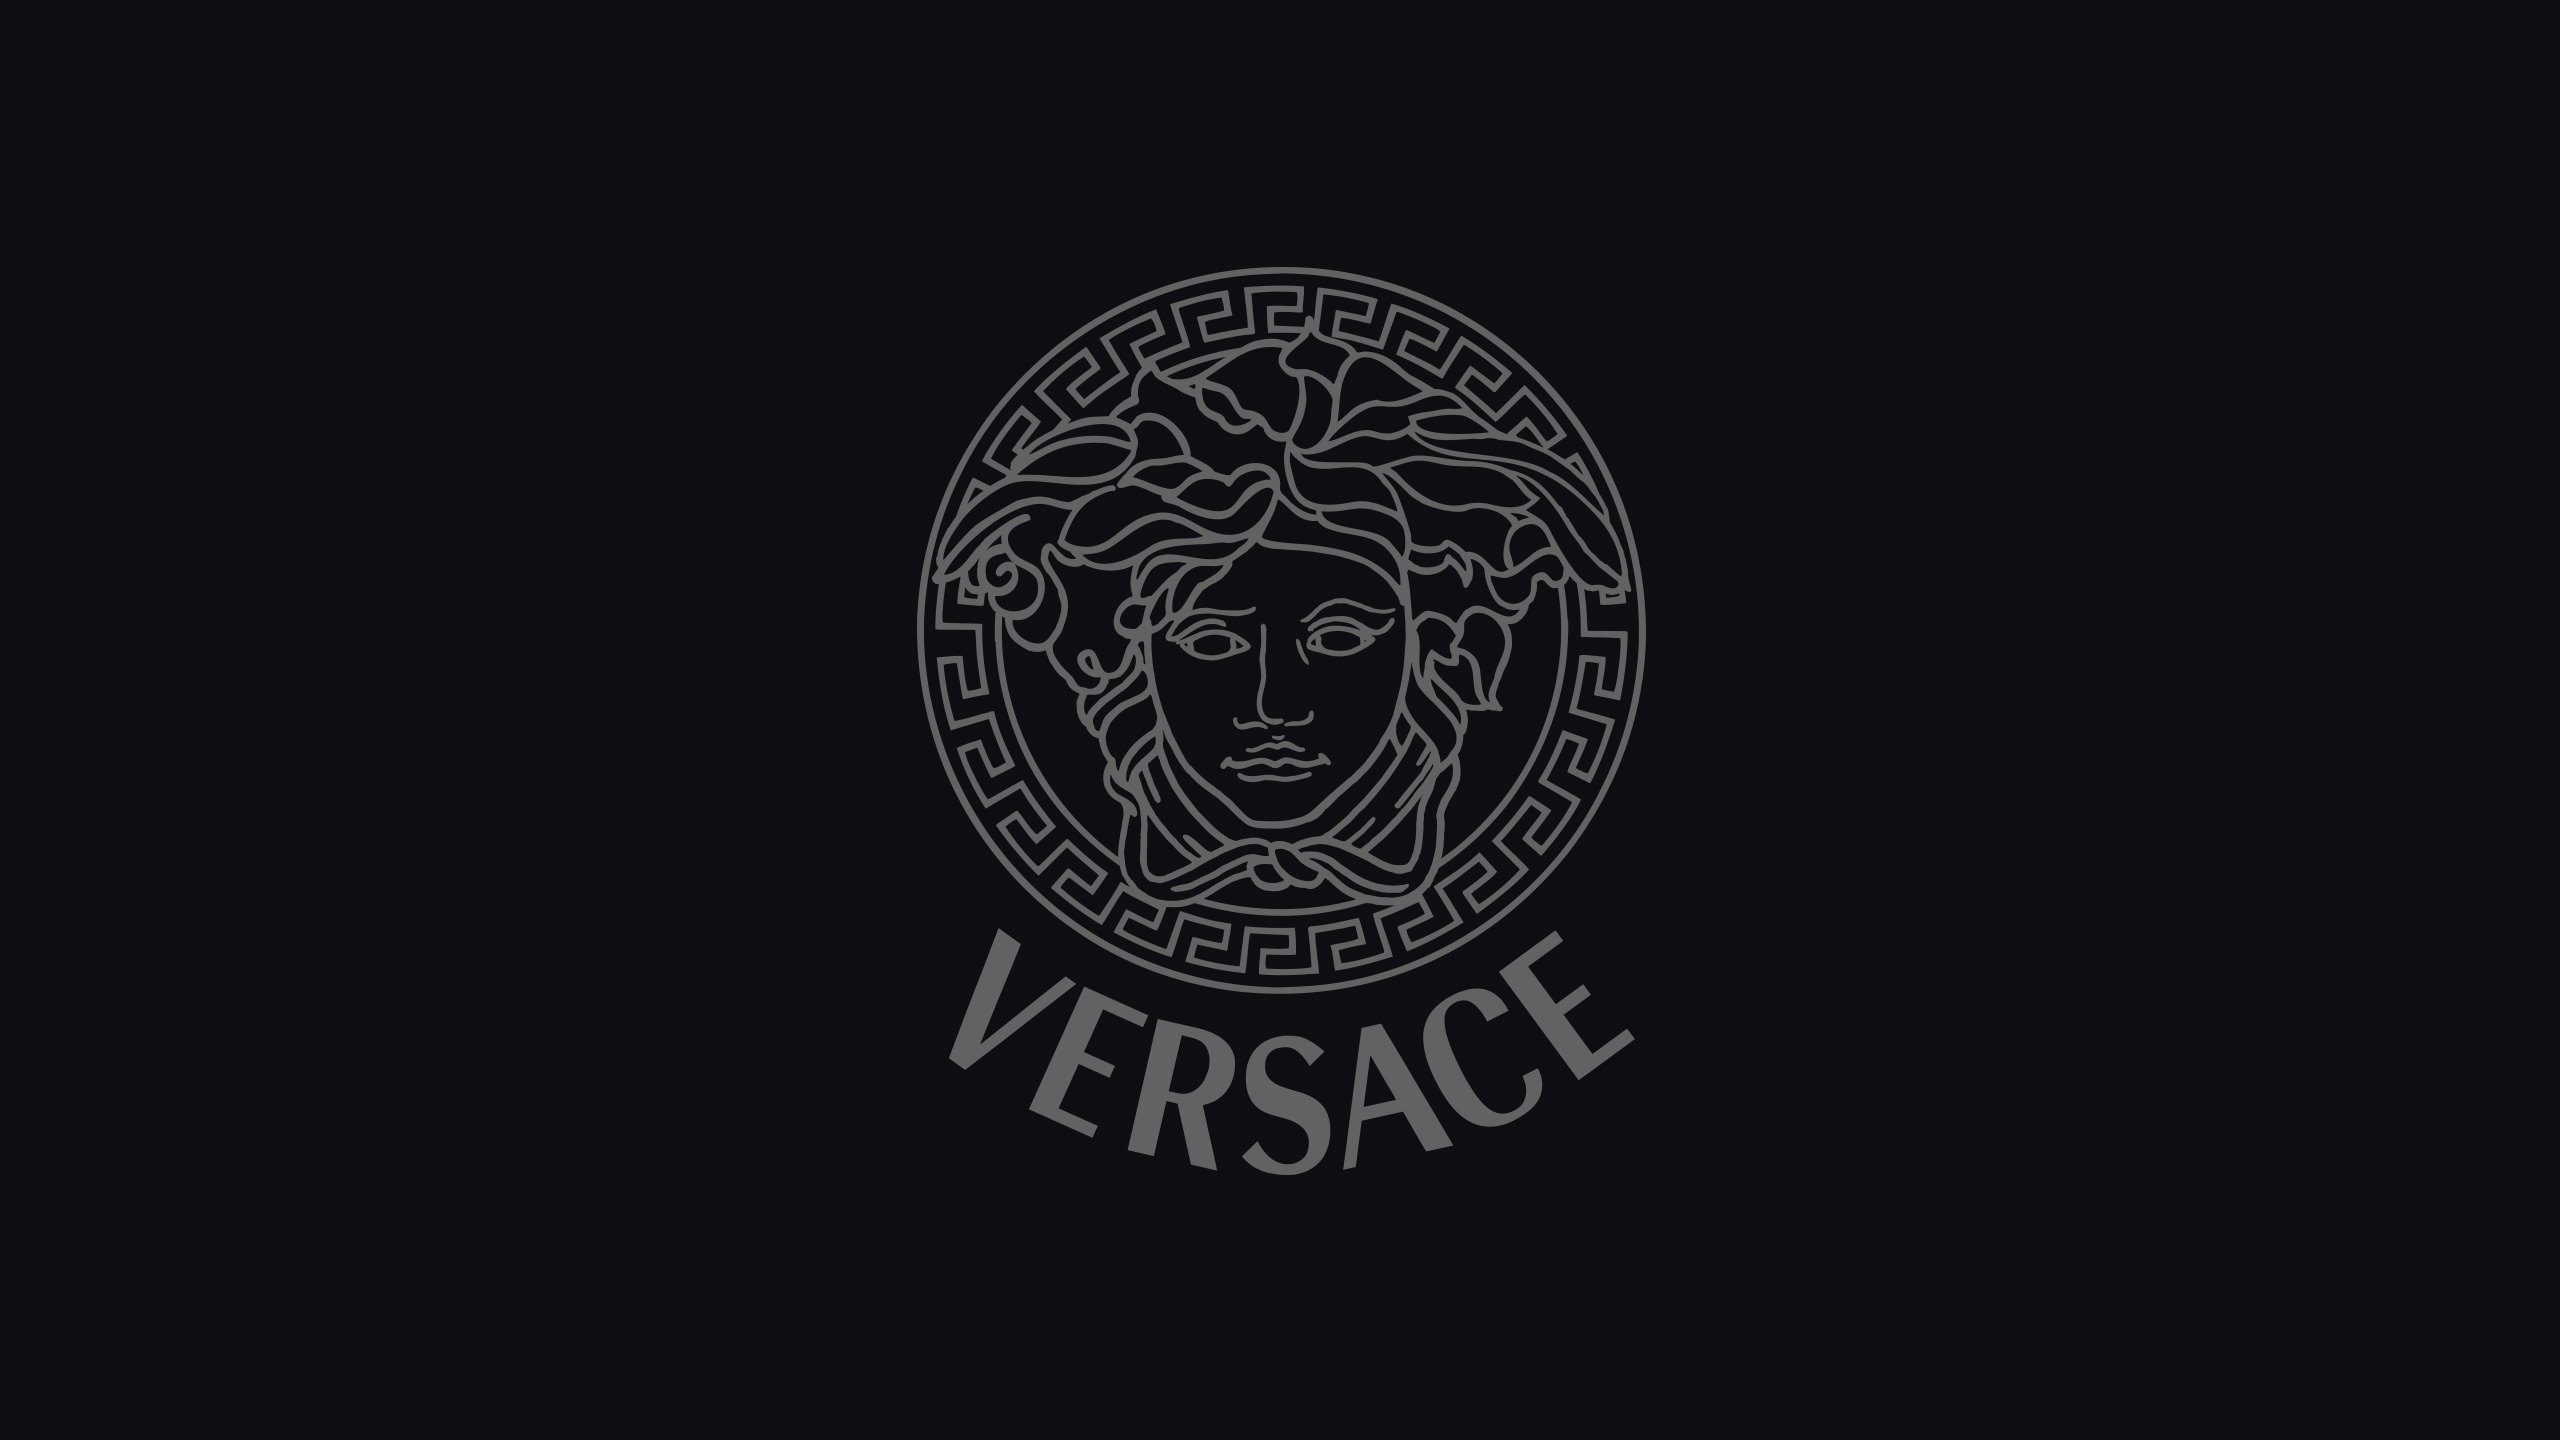 Versace Logo Wallpapers - Wallpaper Cave